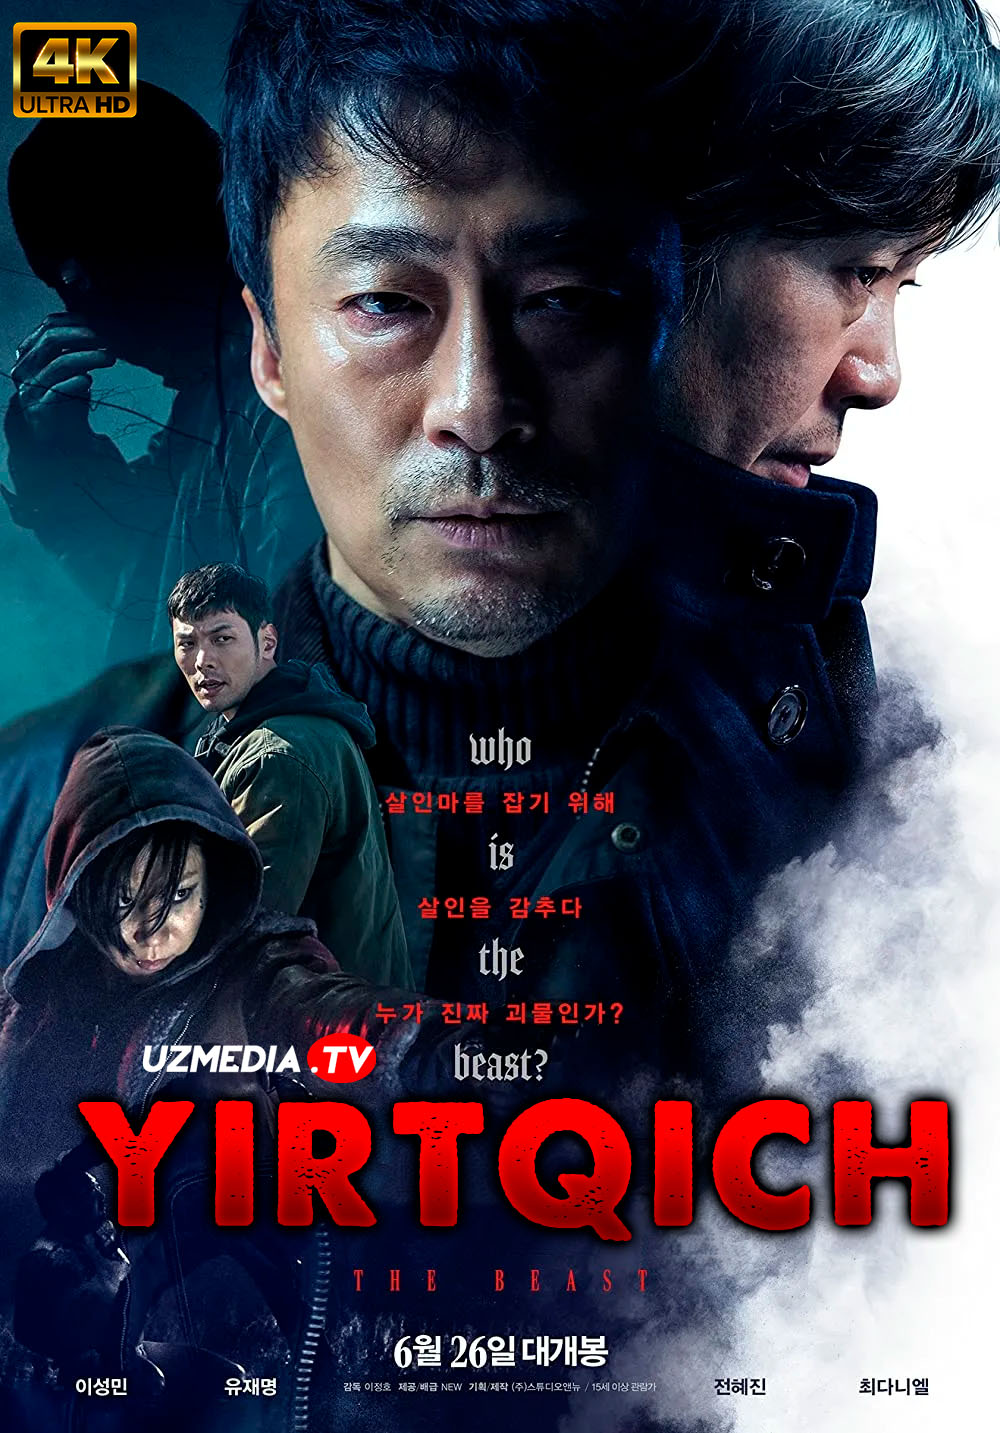 Yirtqich / Hayvon Koreya filmi Uzbek tilida O'zbekcha tarjima kino 2019 4K Ultra UHD skachat